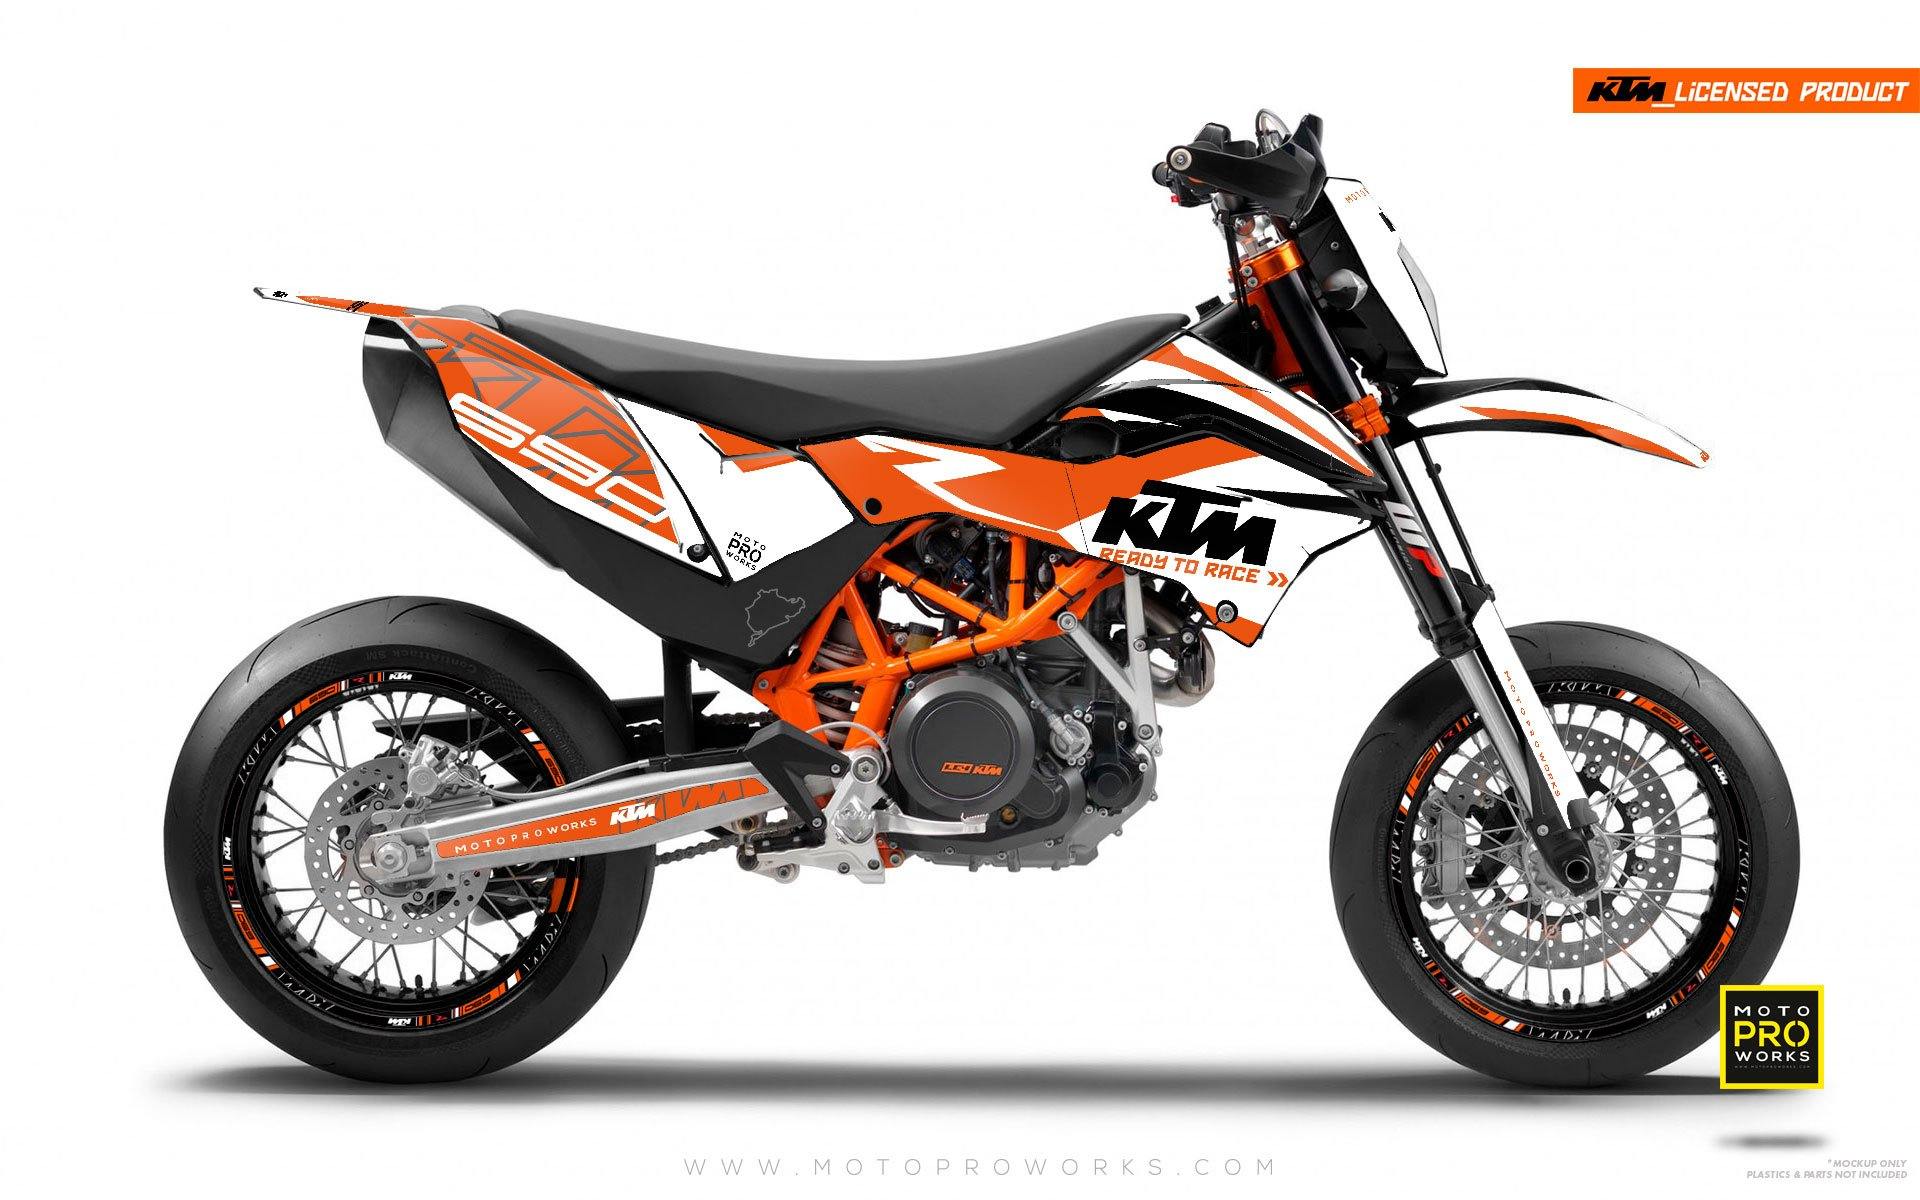 KTM GRAPHIC KIT - "ABSTRAKT" (orange/white) - MotoProWorks | Decals and Bike Graphic kit